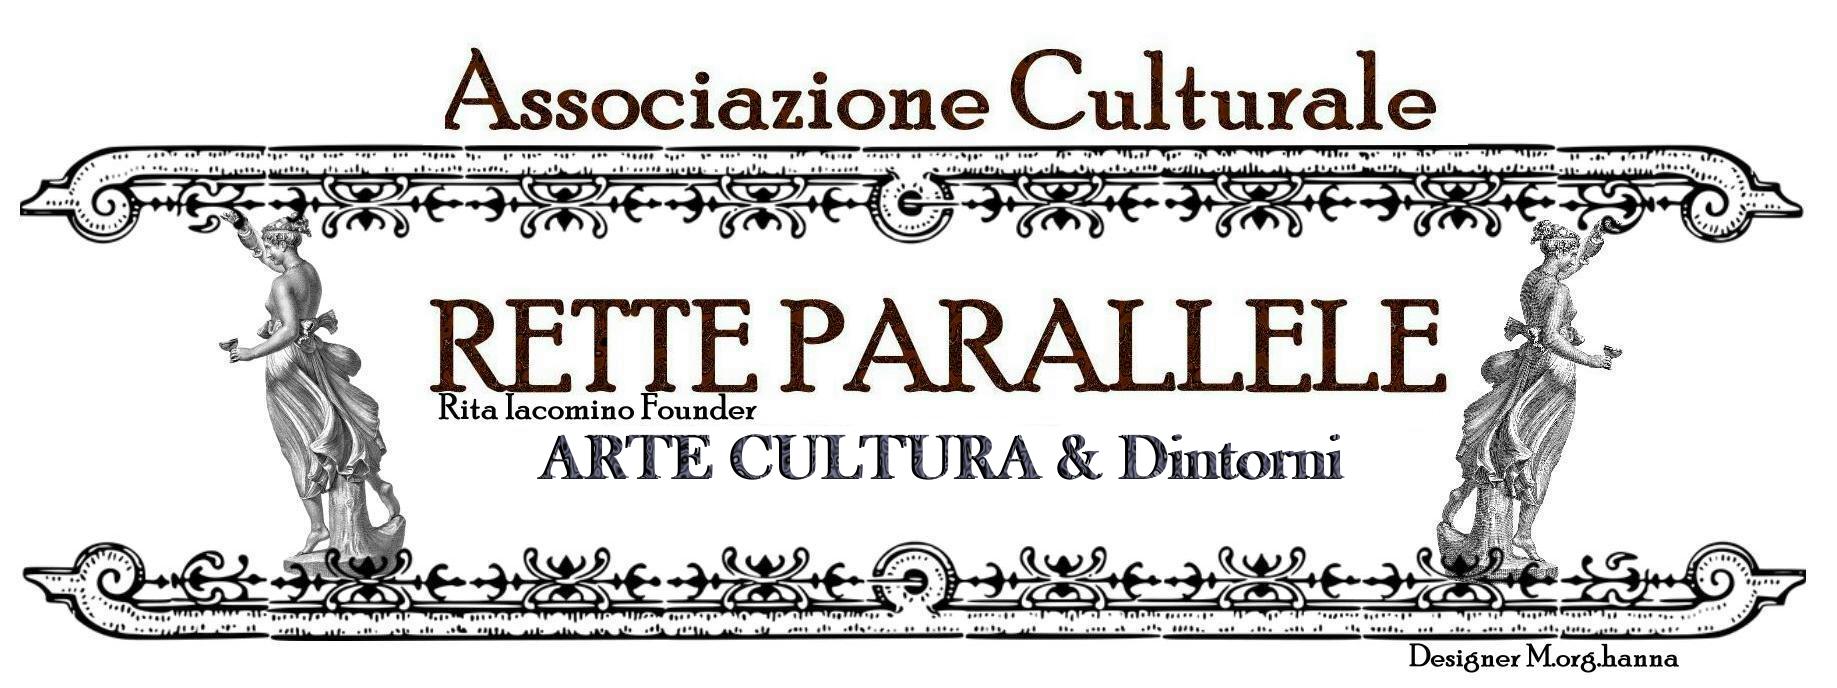 Rette Parallele Associazione Culturale